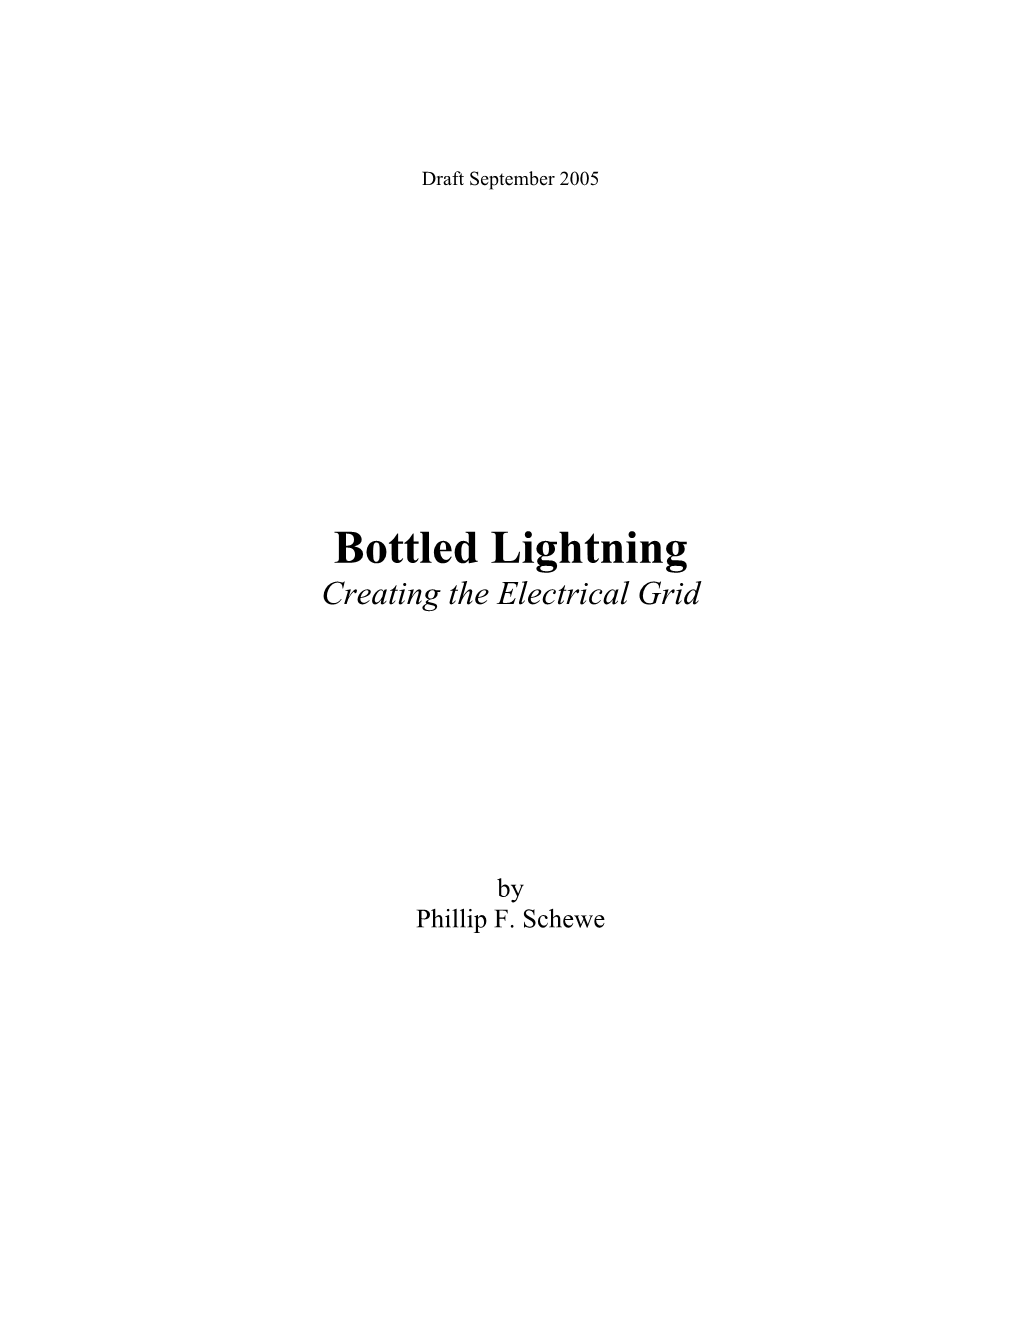 Bottled Lightning Creating the Electrical Grid